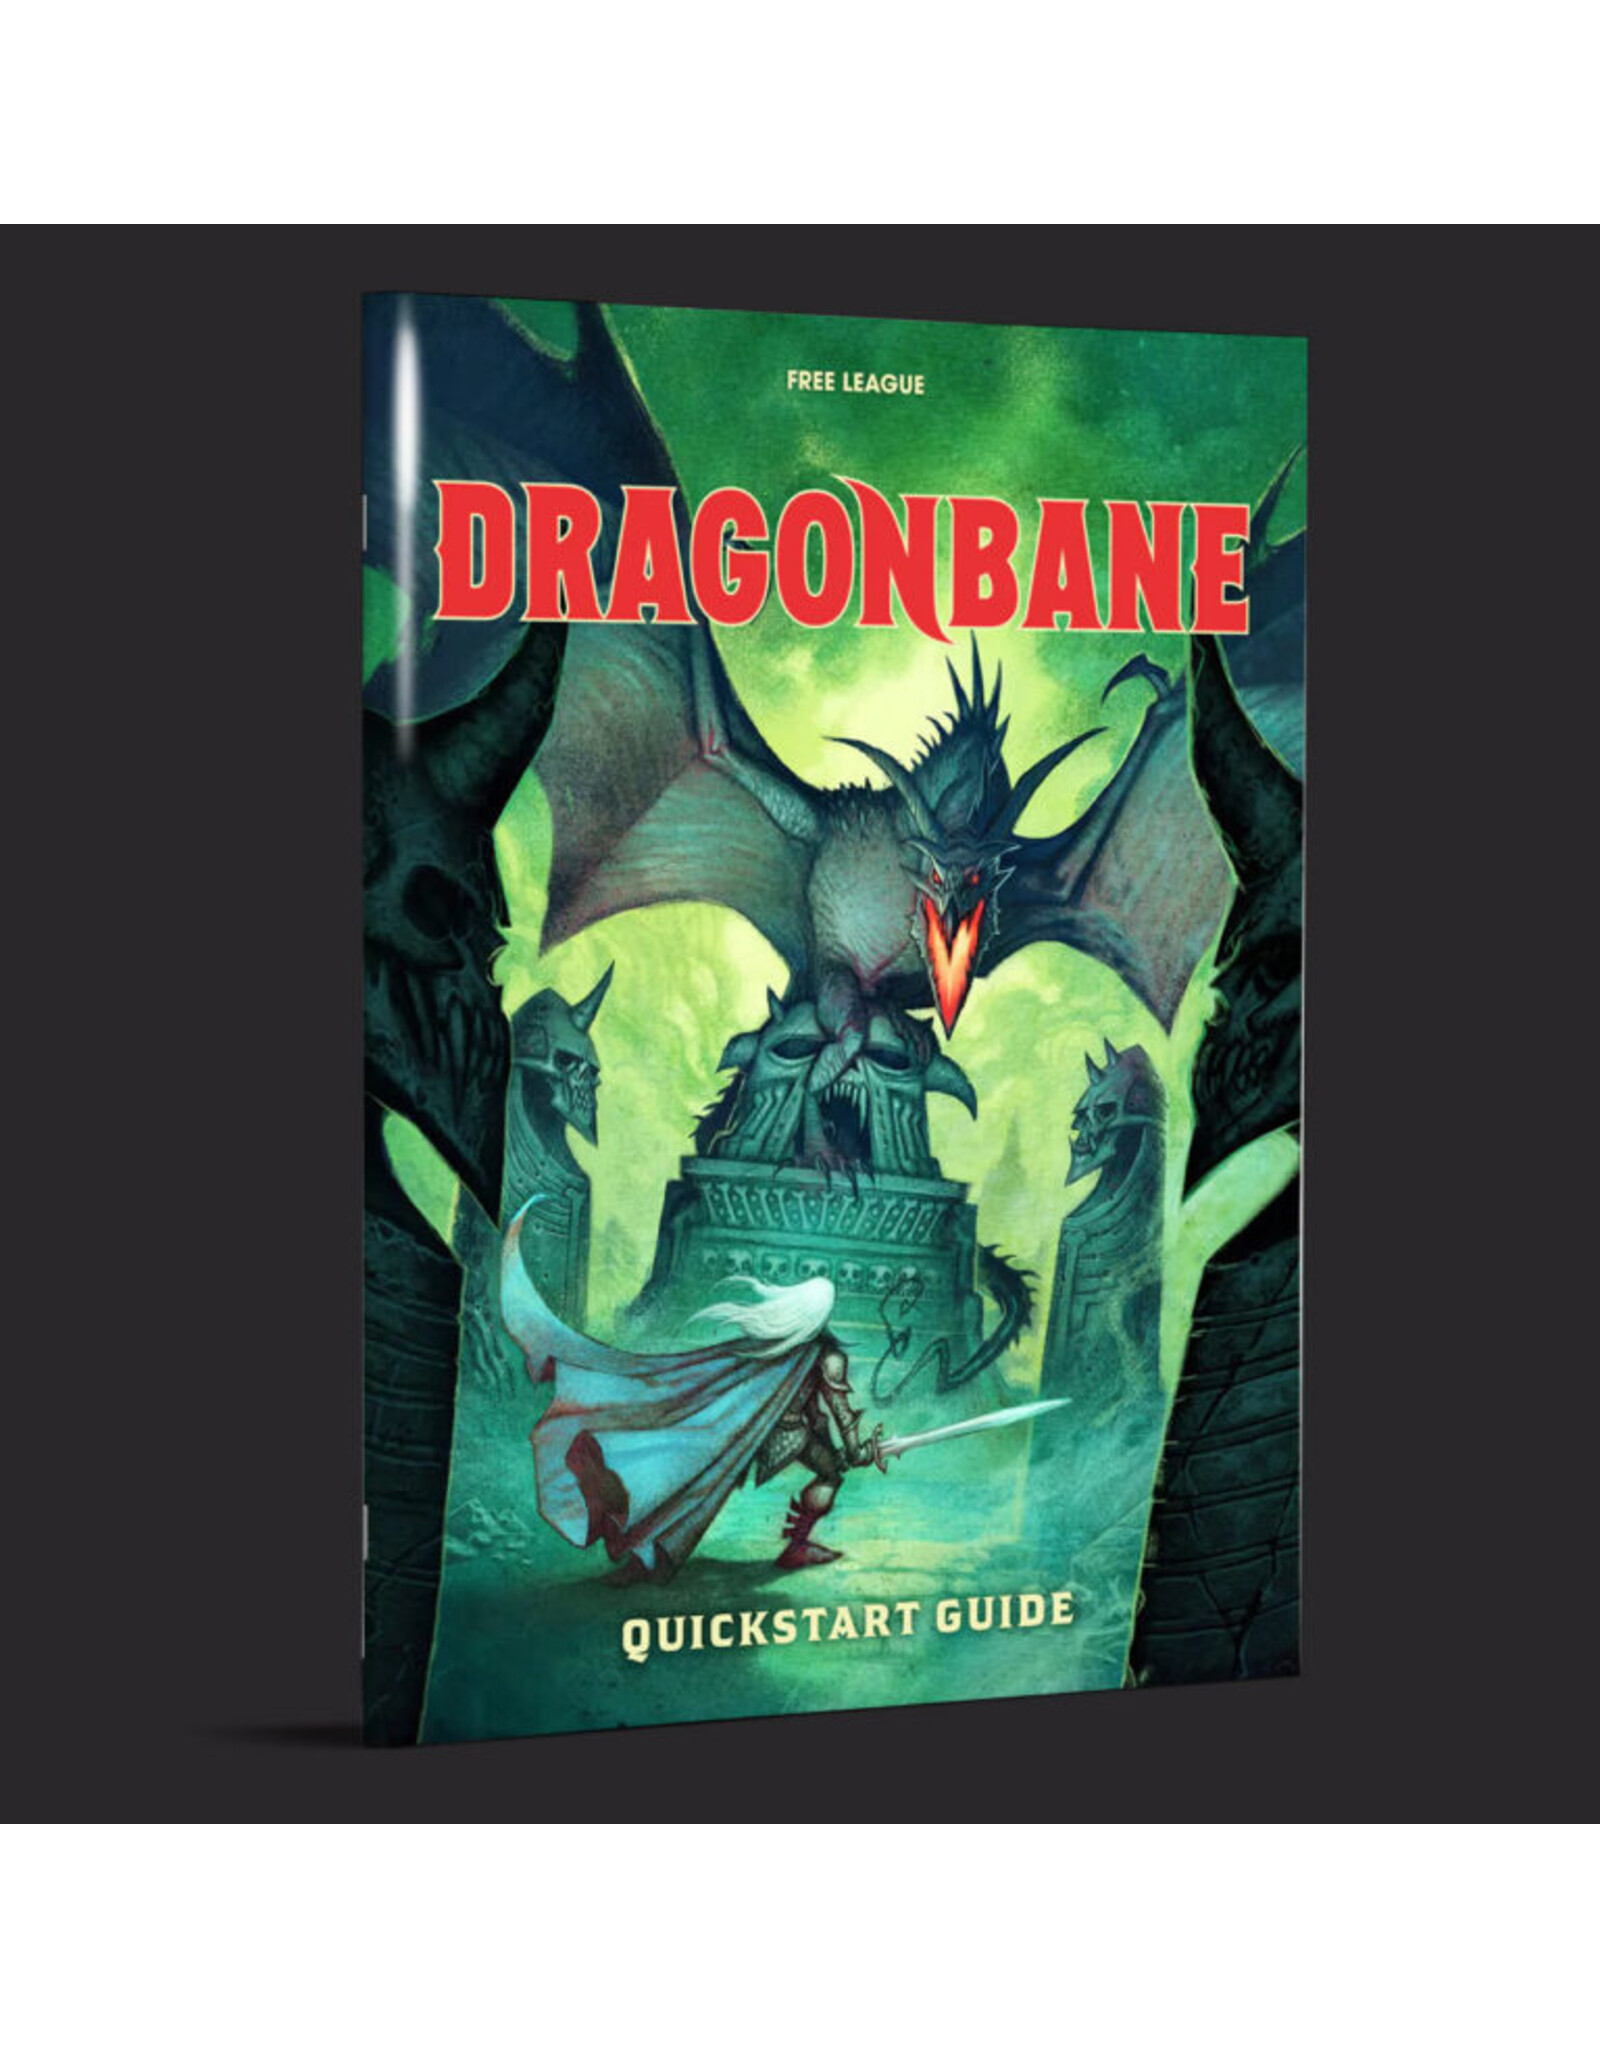 Dragonbane Quickstart Guide